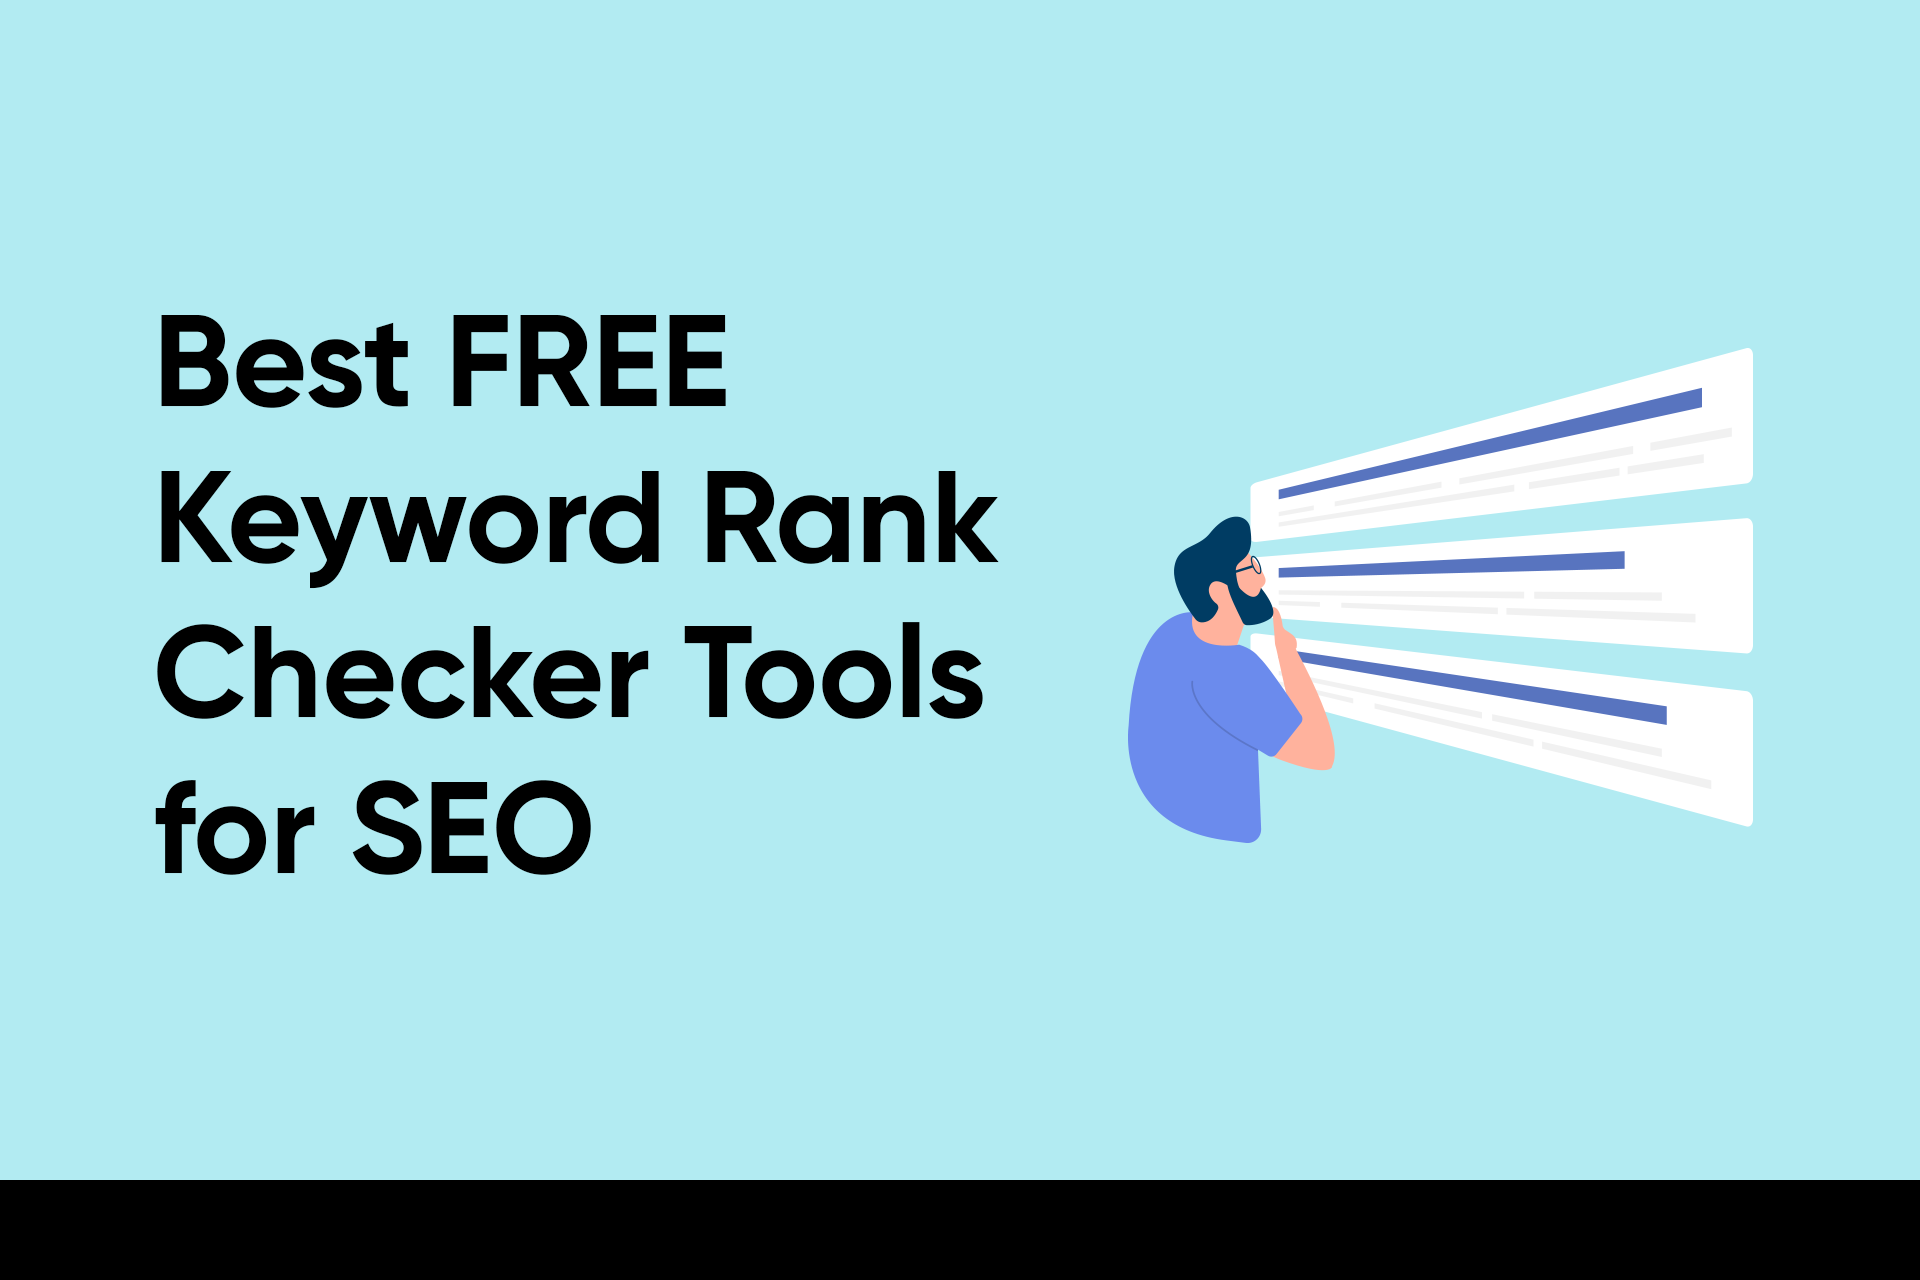 Best FREE Keyword Rank Checker Tools for SEO